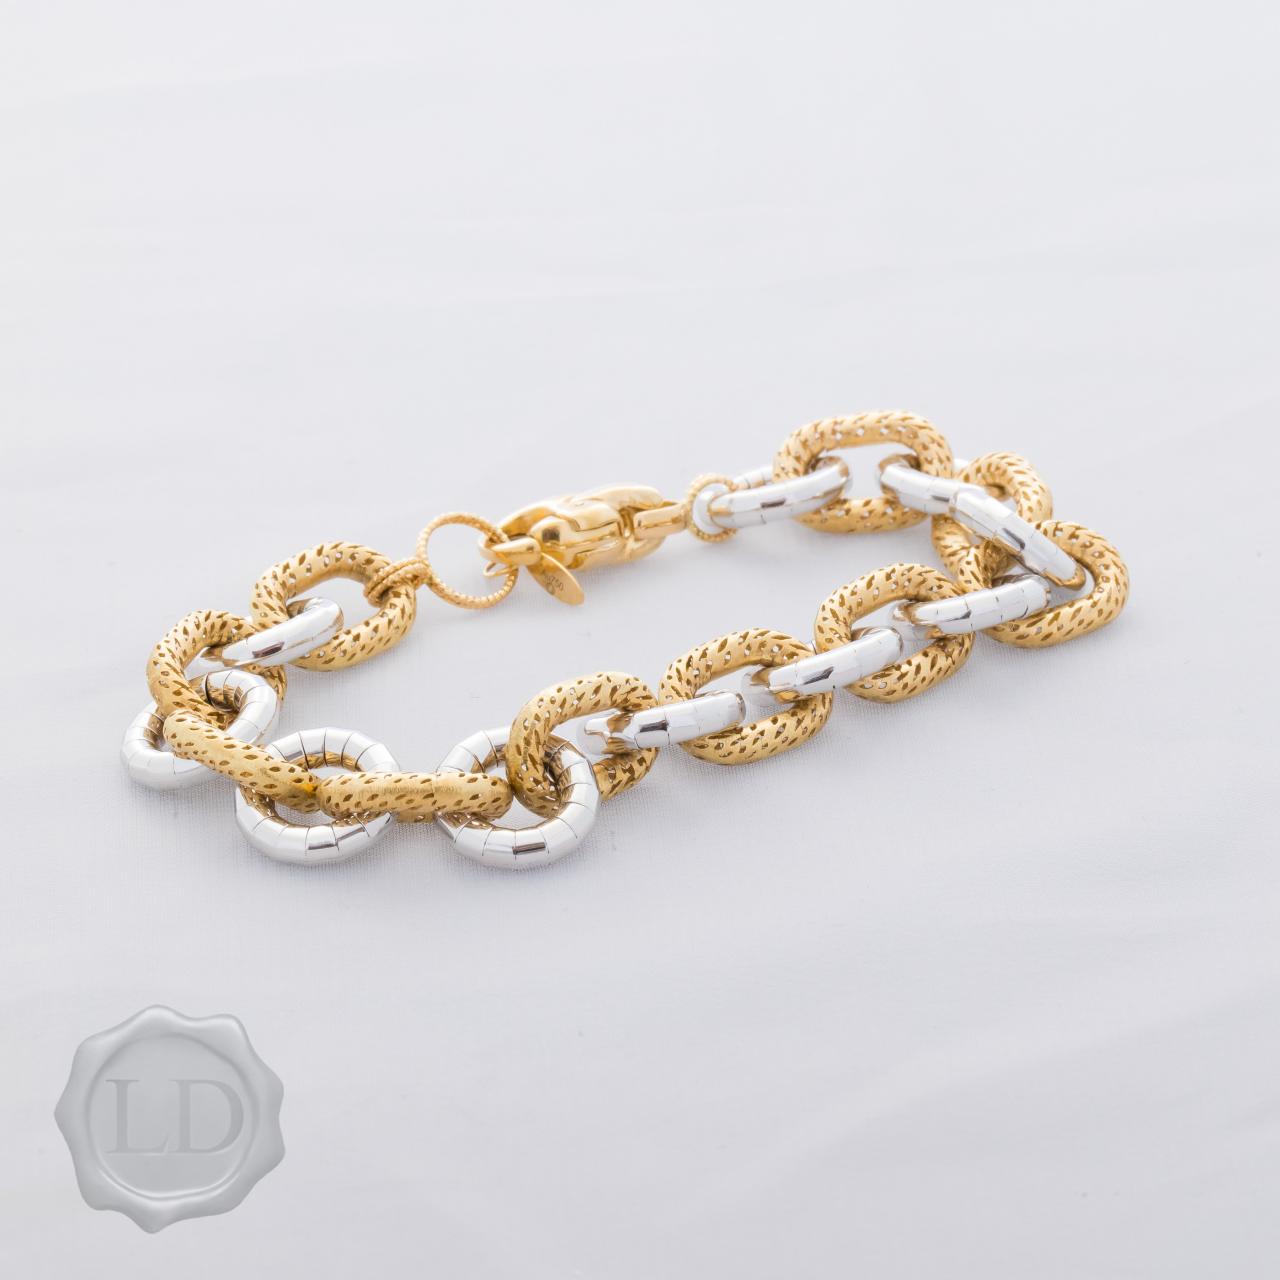 High carat yellow & white gold chain bracelet